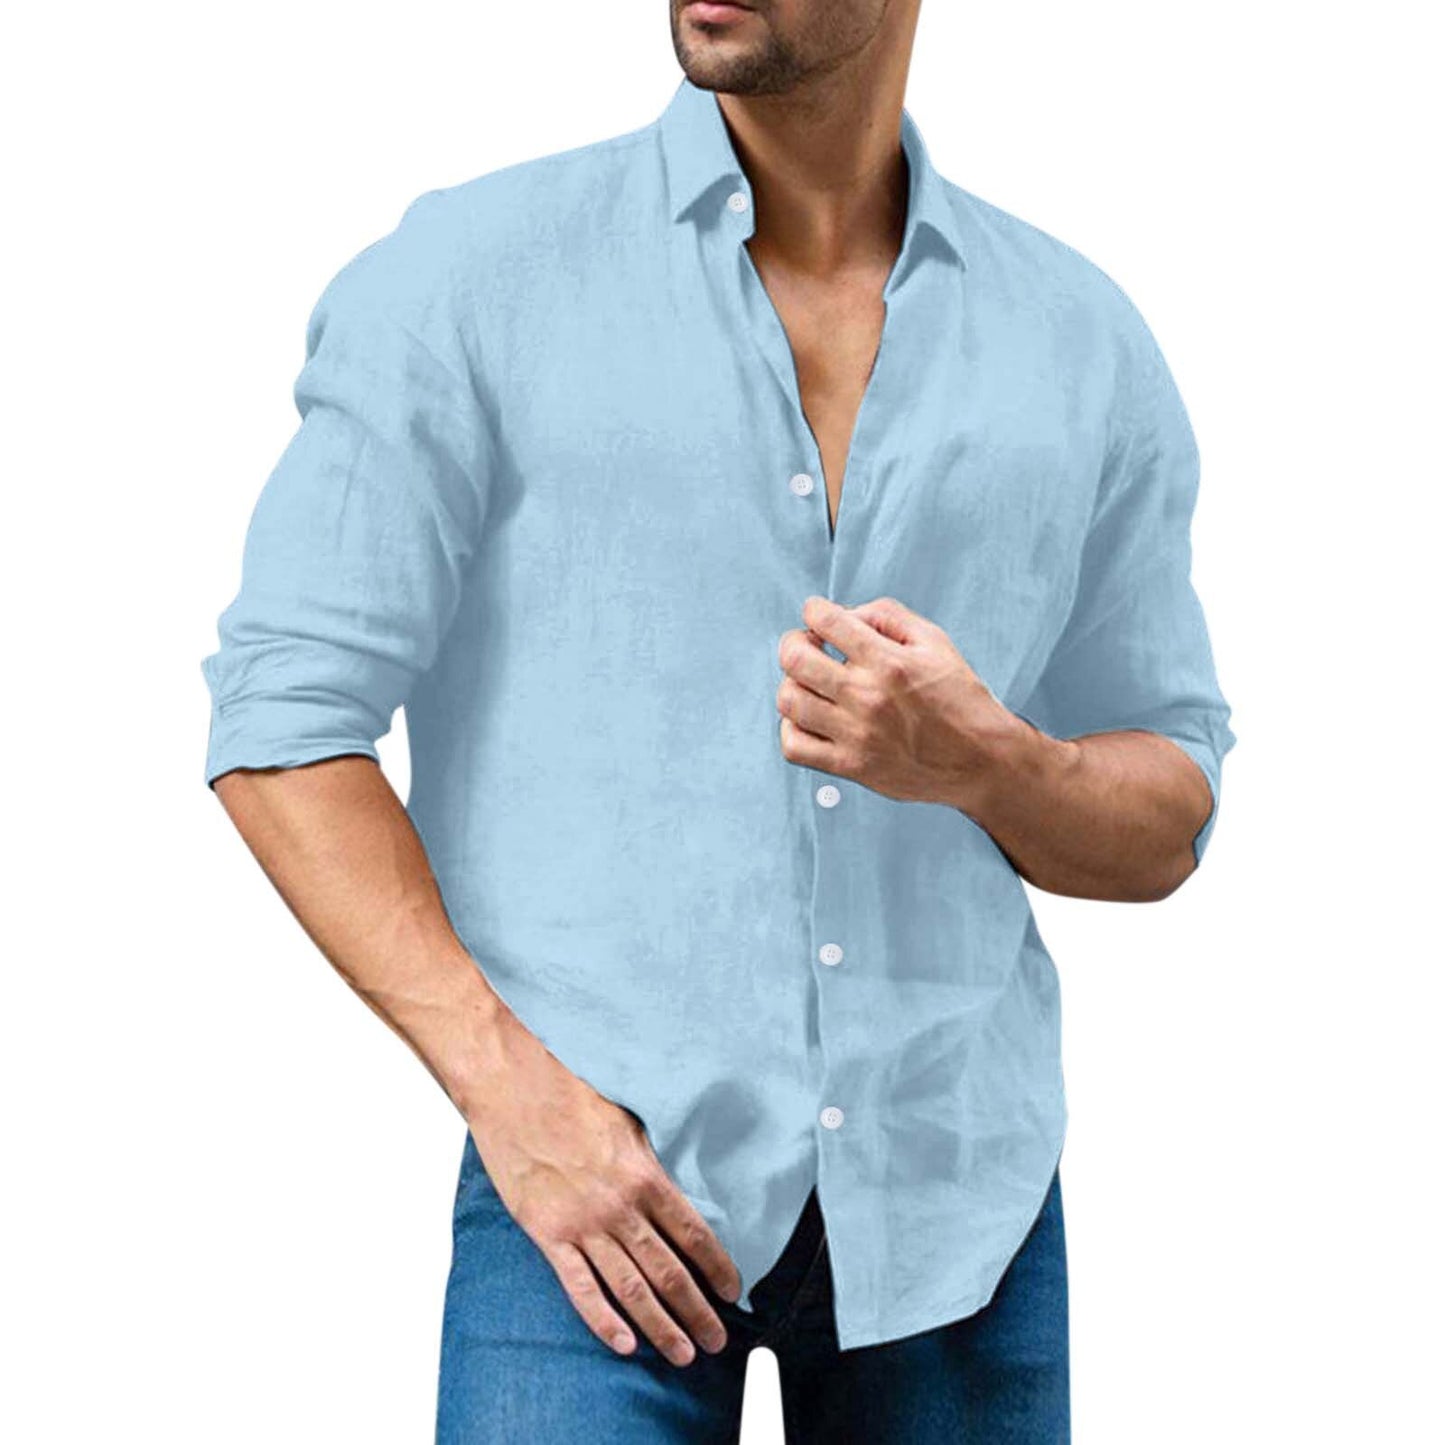 Male Cotton Linen Solid Shirt